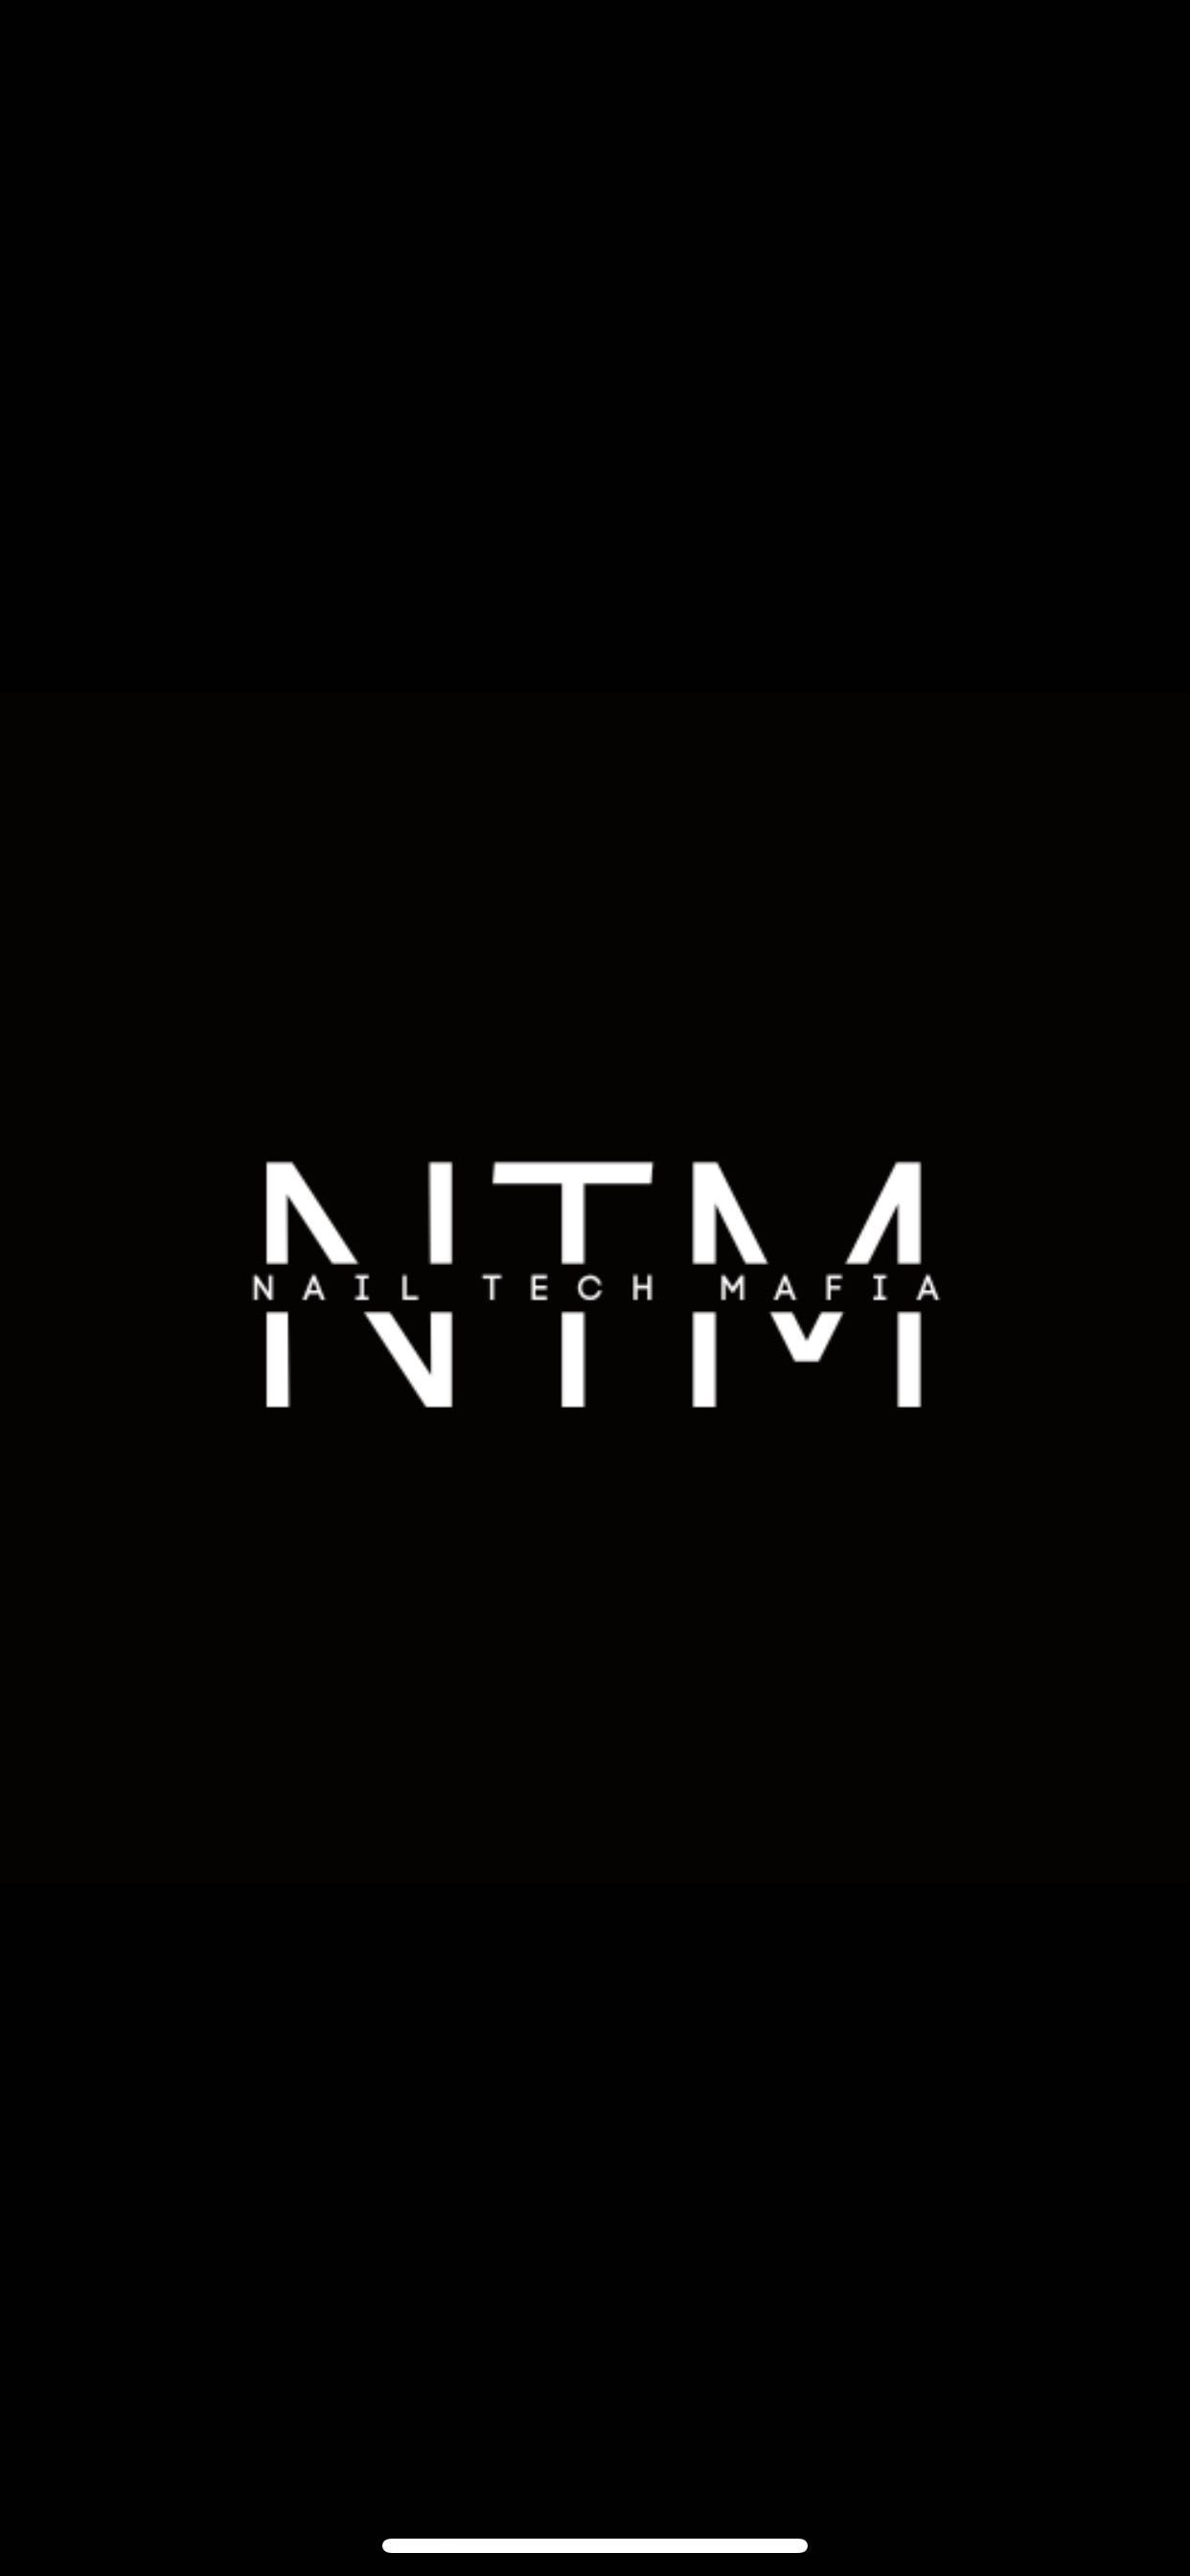 NTM NAIL STUDIO, 154 W 14th St, North wing, 4th floor, New York, 10011